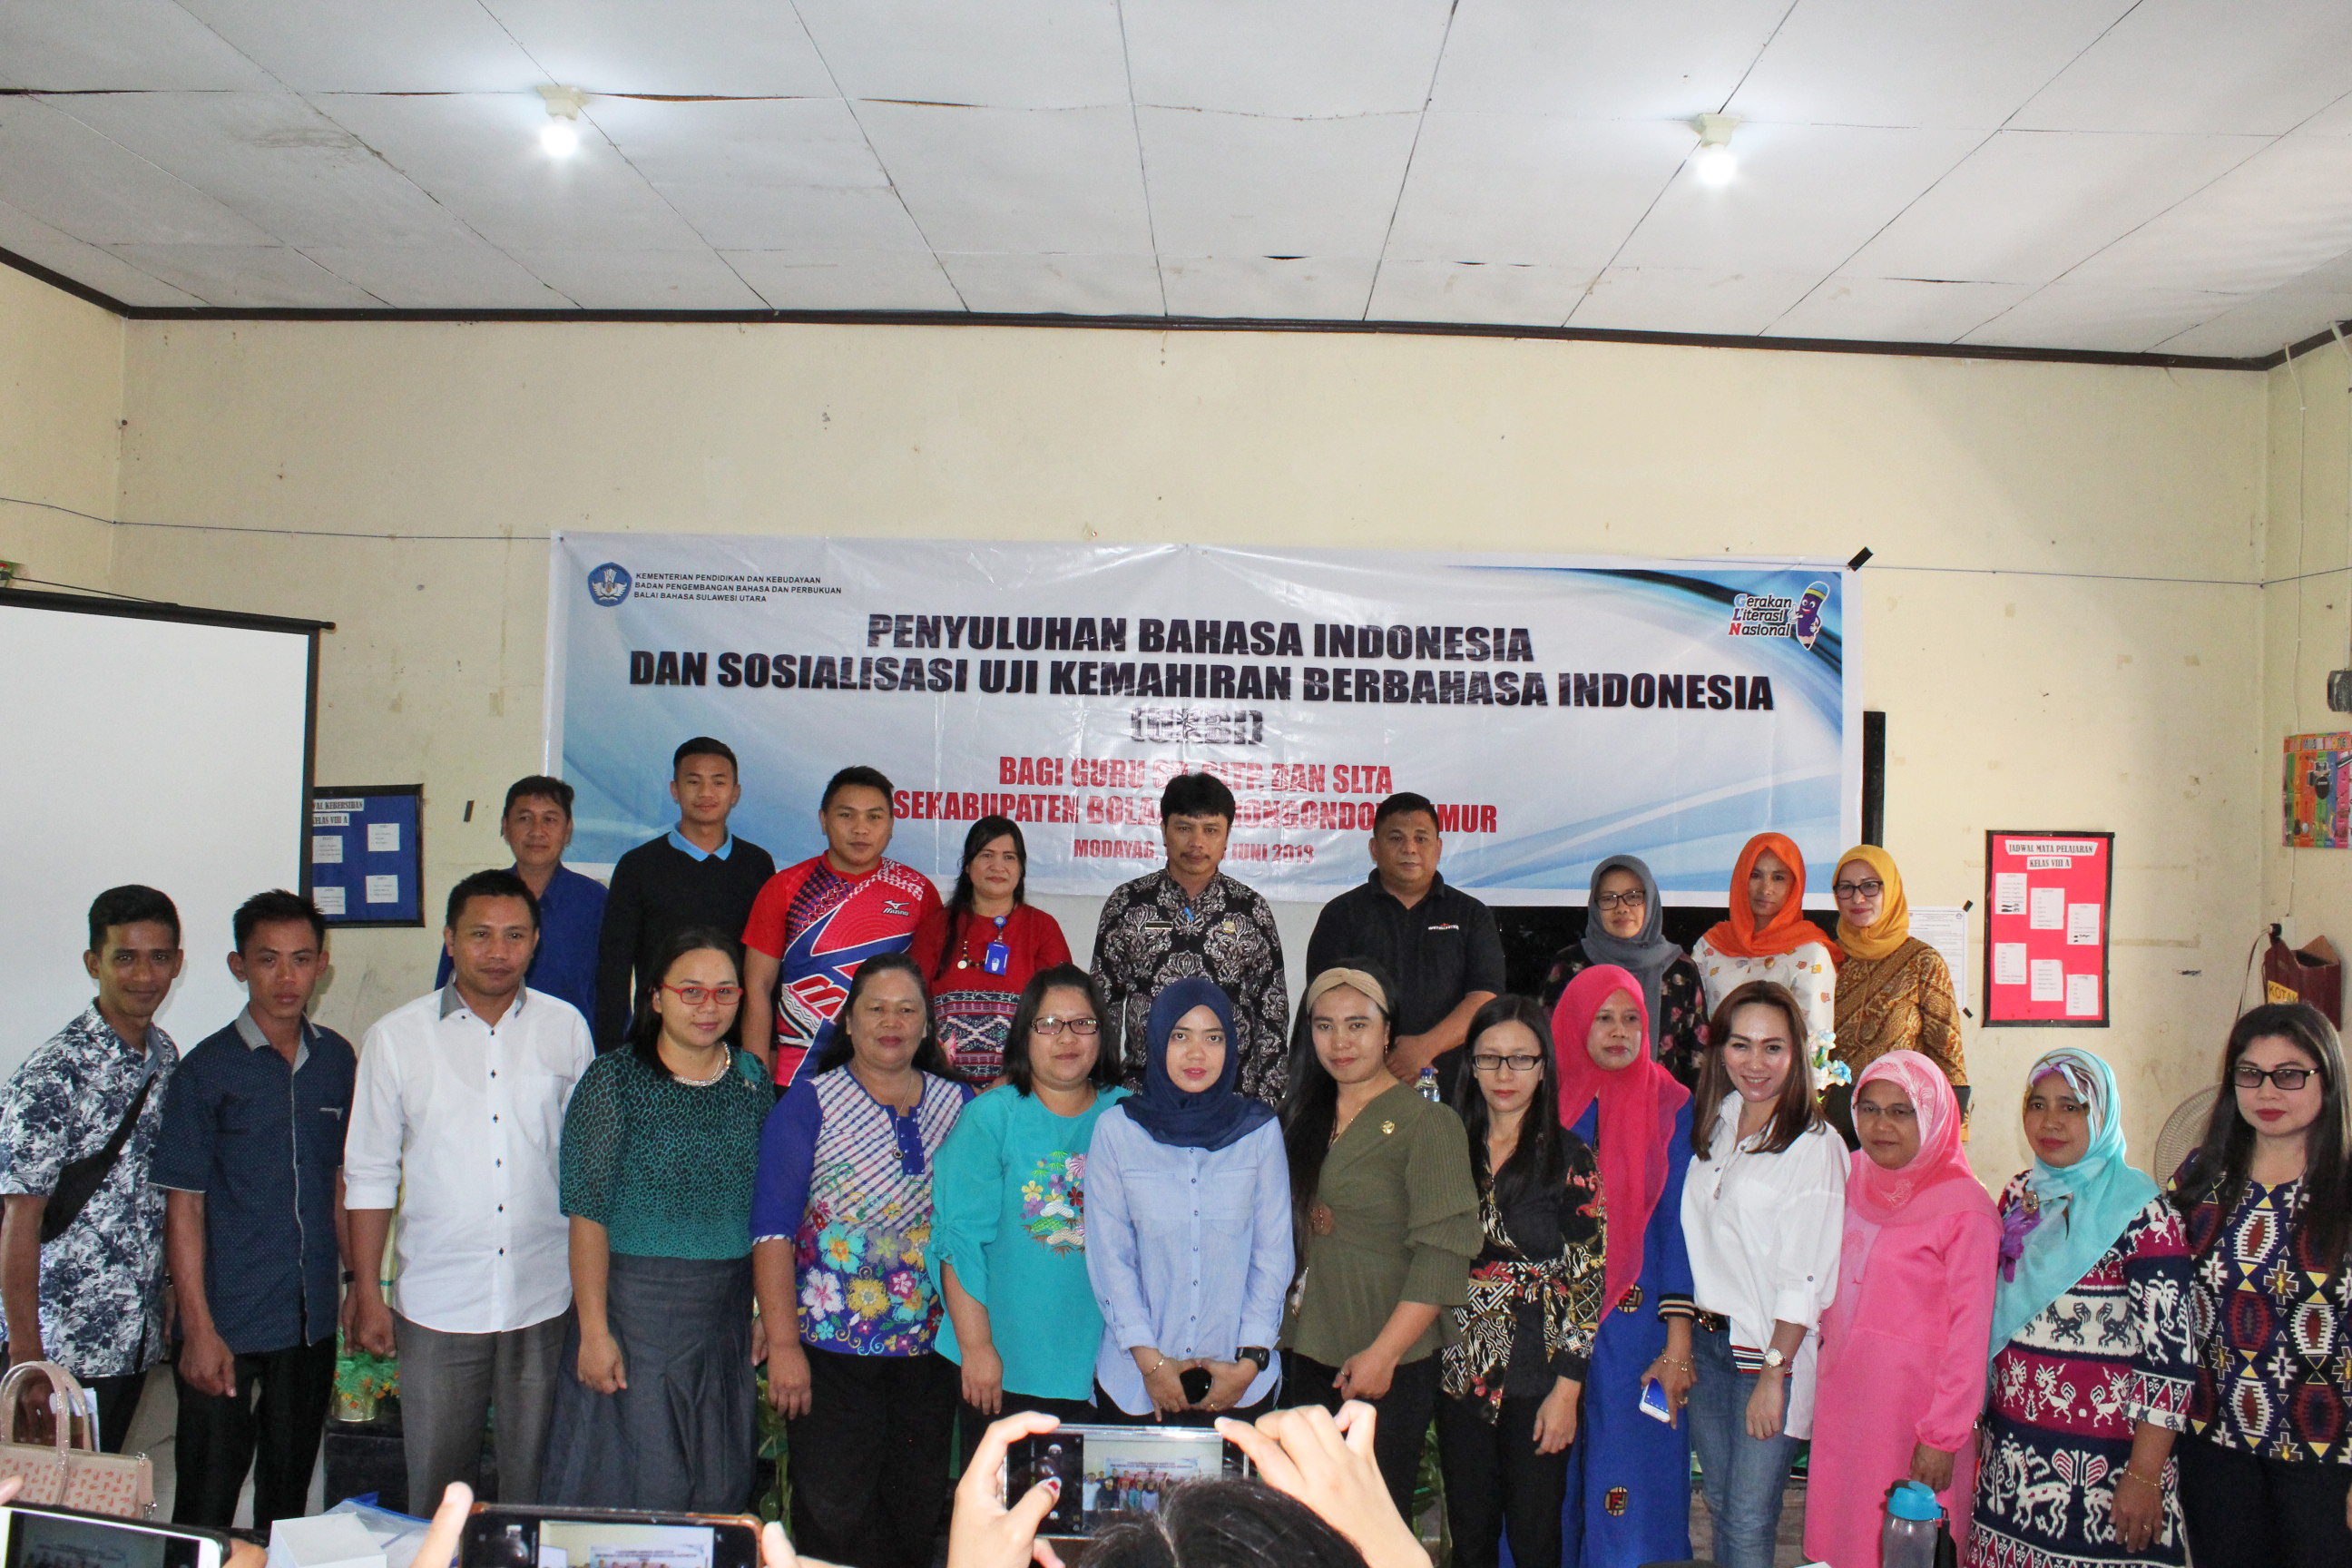 Penyuluhan dan Sosialisasi Uji Kemahiran Berbahasa Indonesia di Bolaang Mongondow Timur